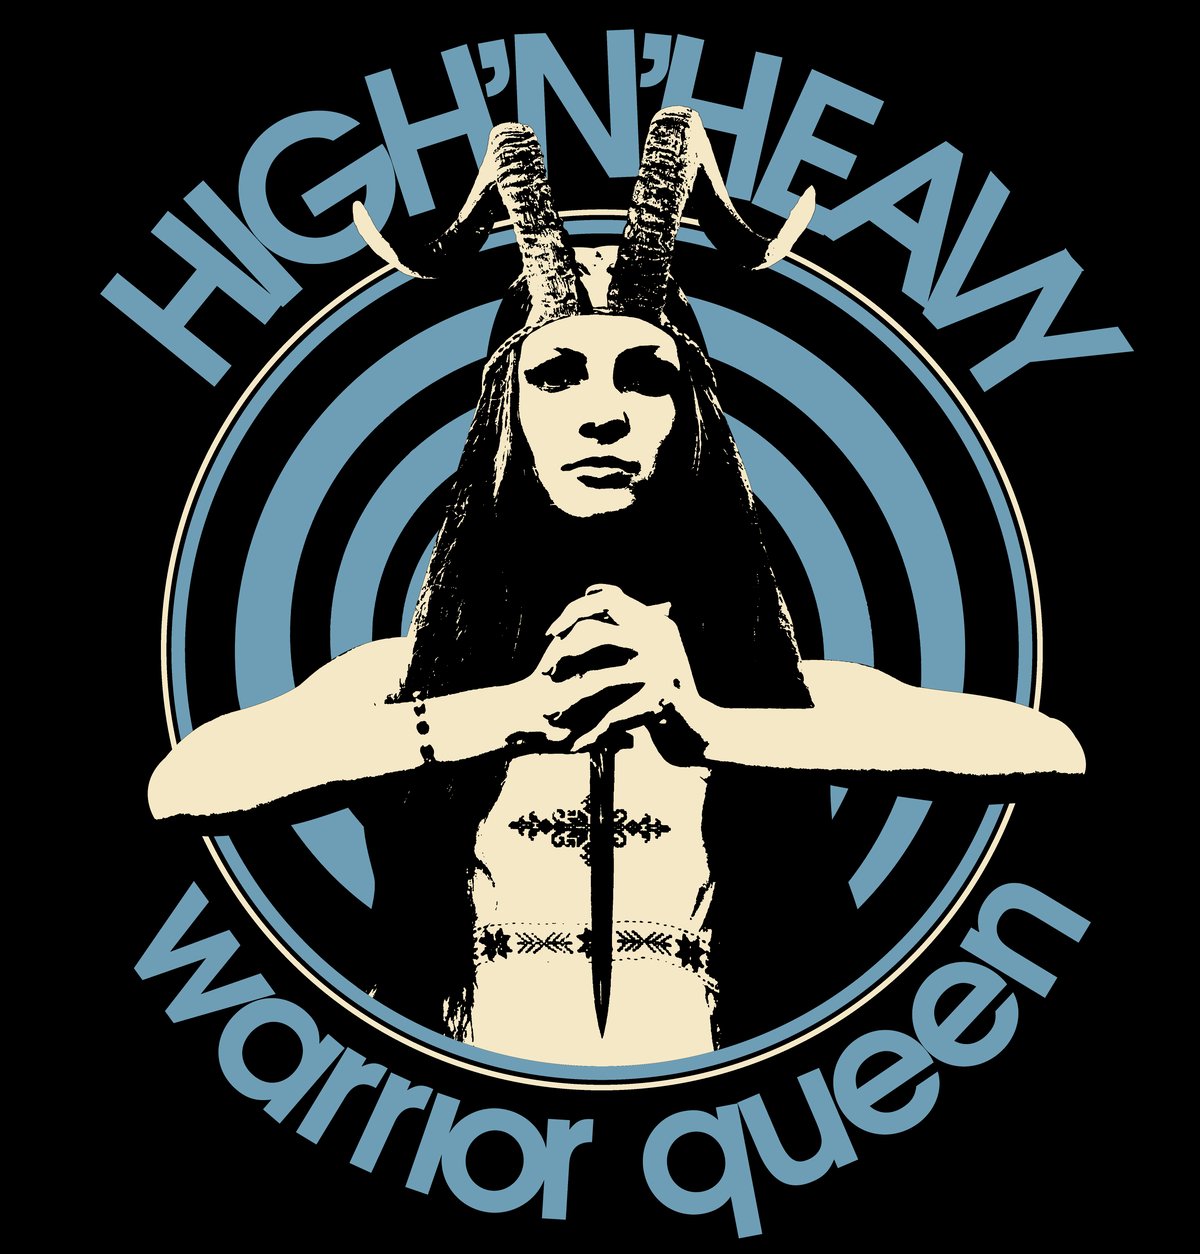 Image of HIGH N' HEAVY - WARRIOR QUEEN Ultra Ltd "Warrior Edition"